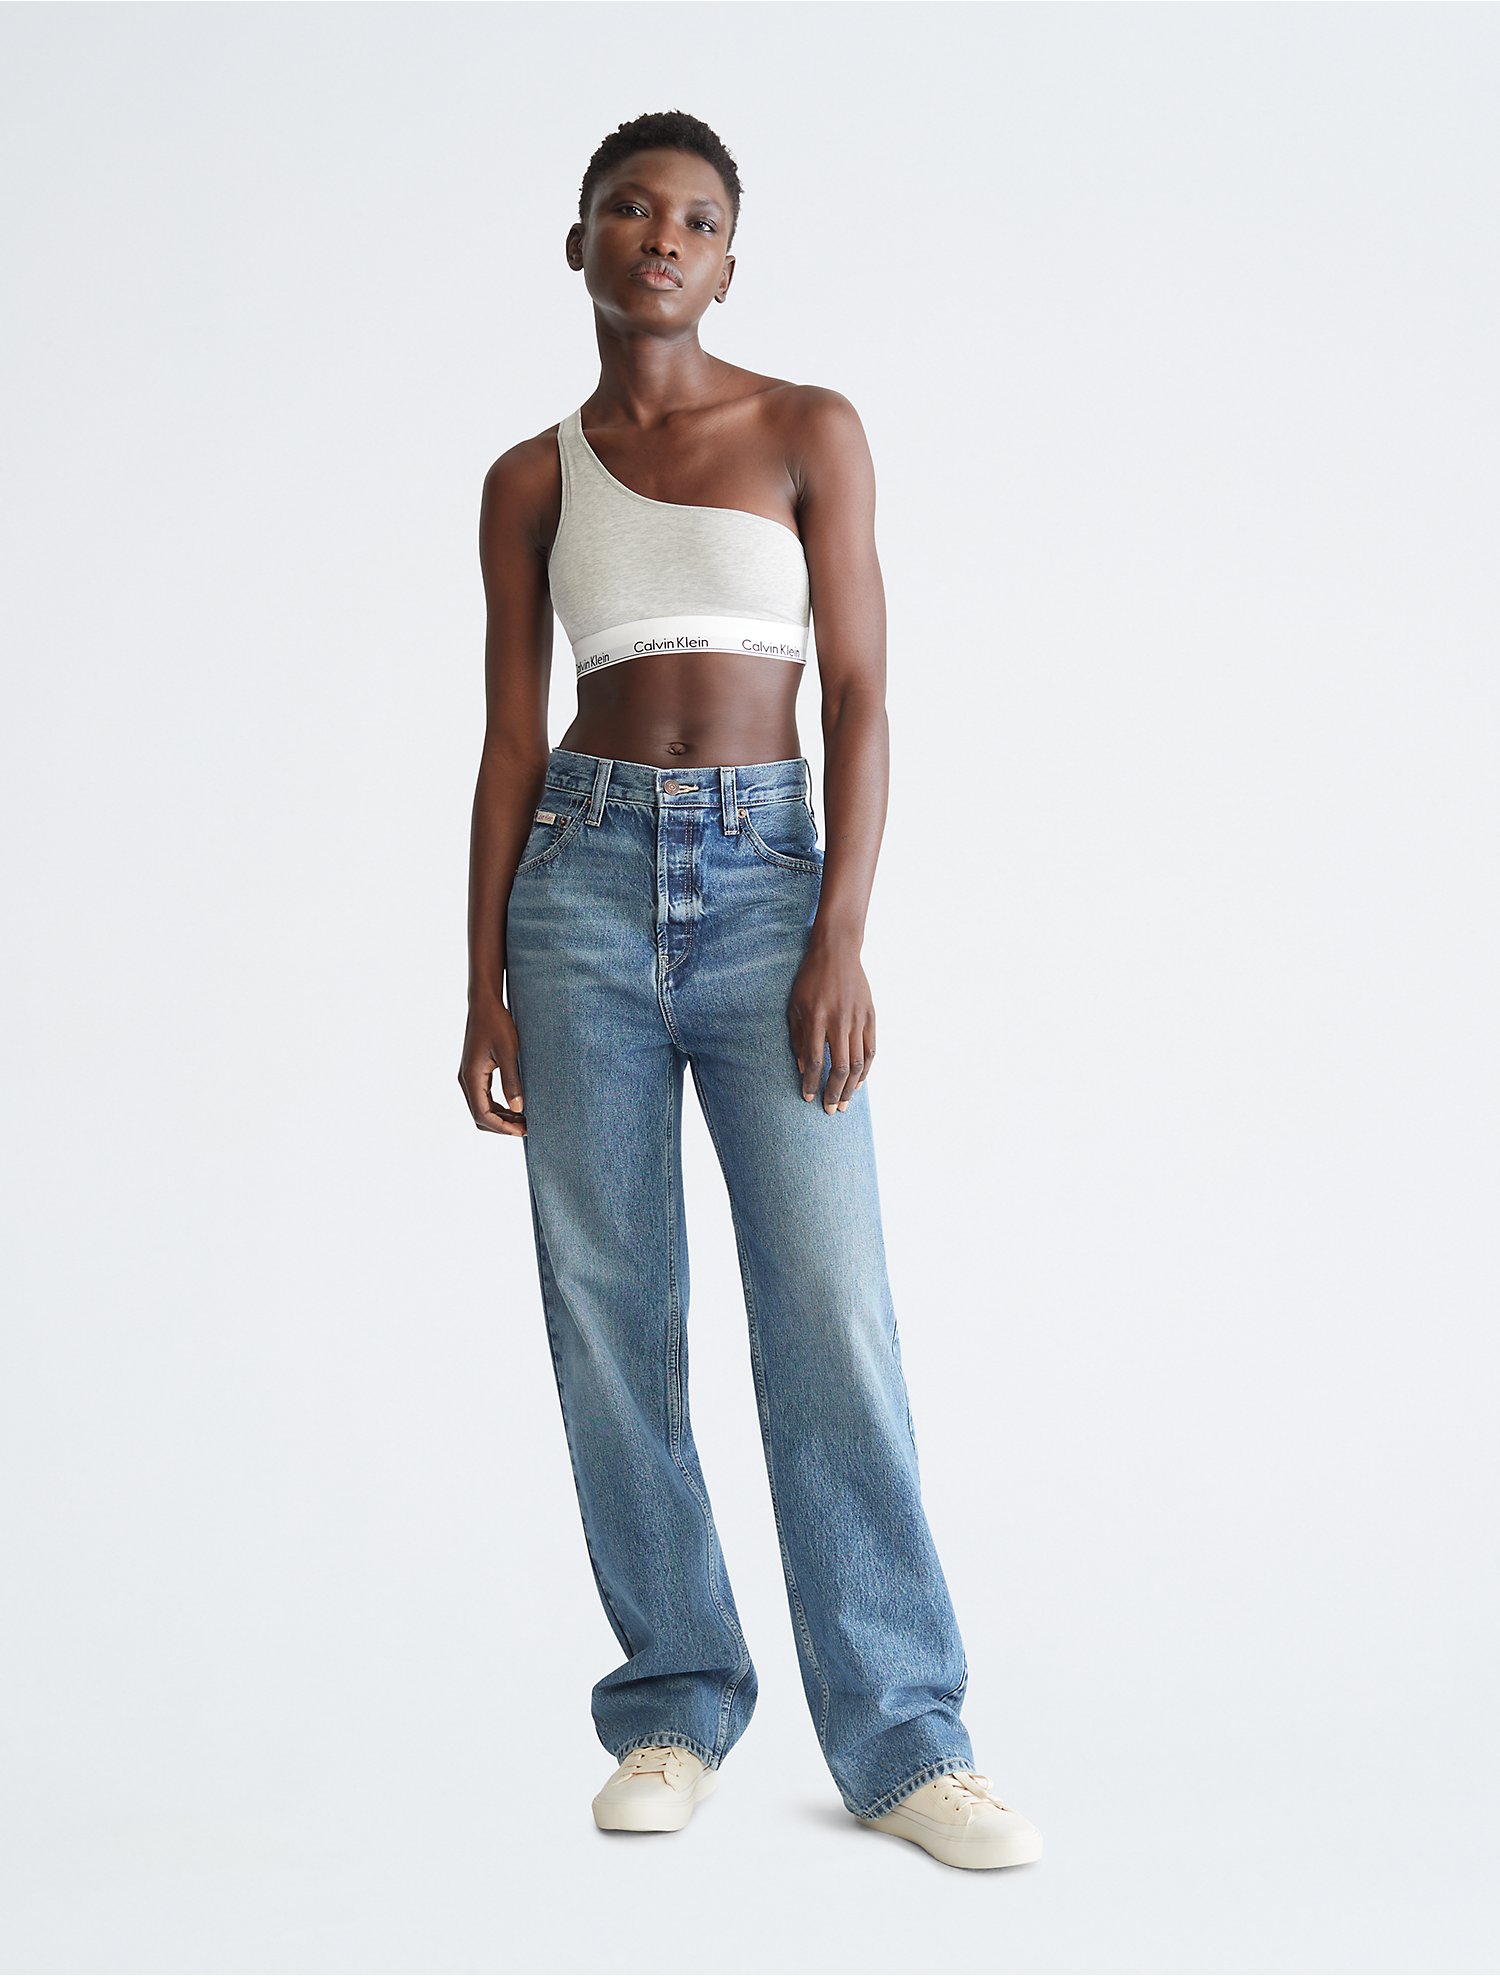 Descubrir 35+ imagen calvin klein relaxed fit jeans